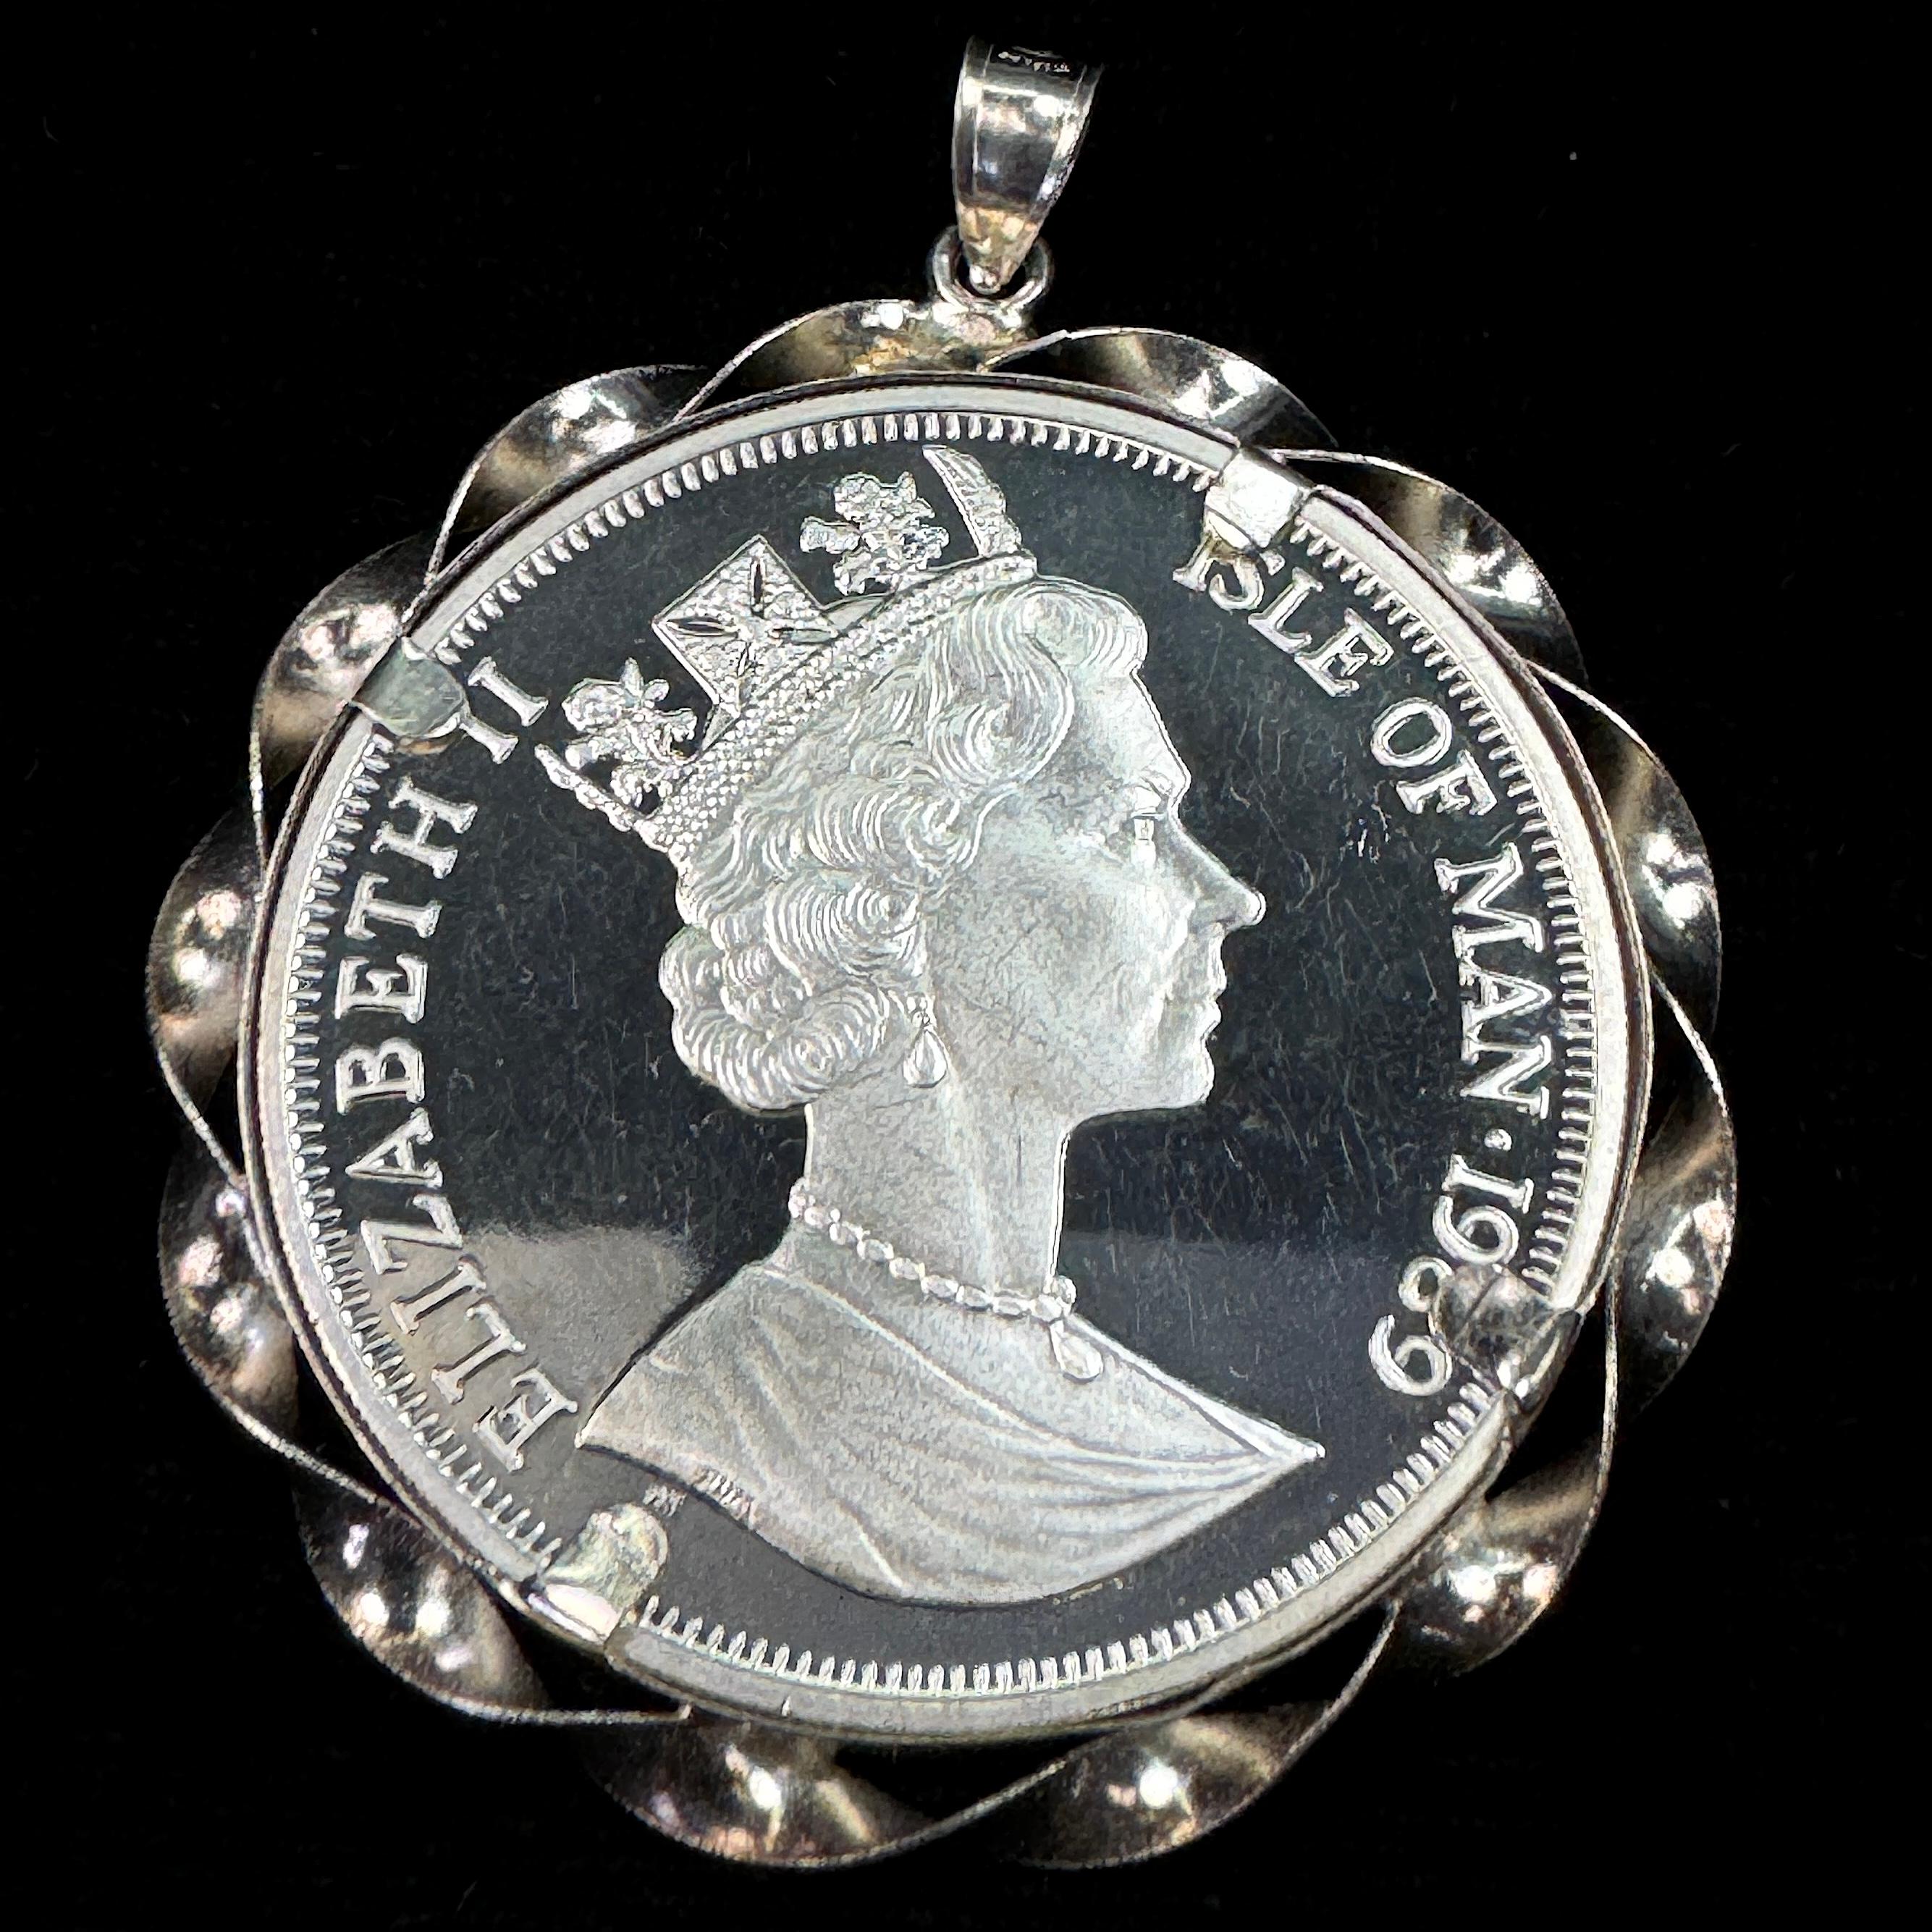 Proof 1989 Isle of Man 1oz silver crown in a sterling silver bezel